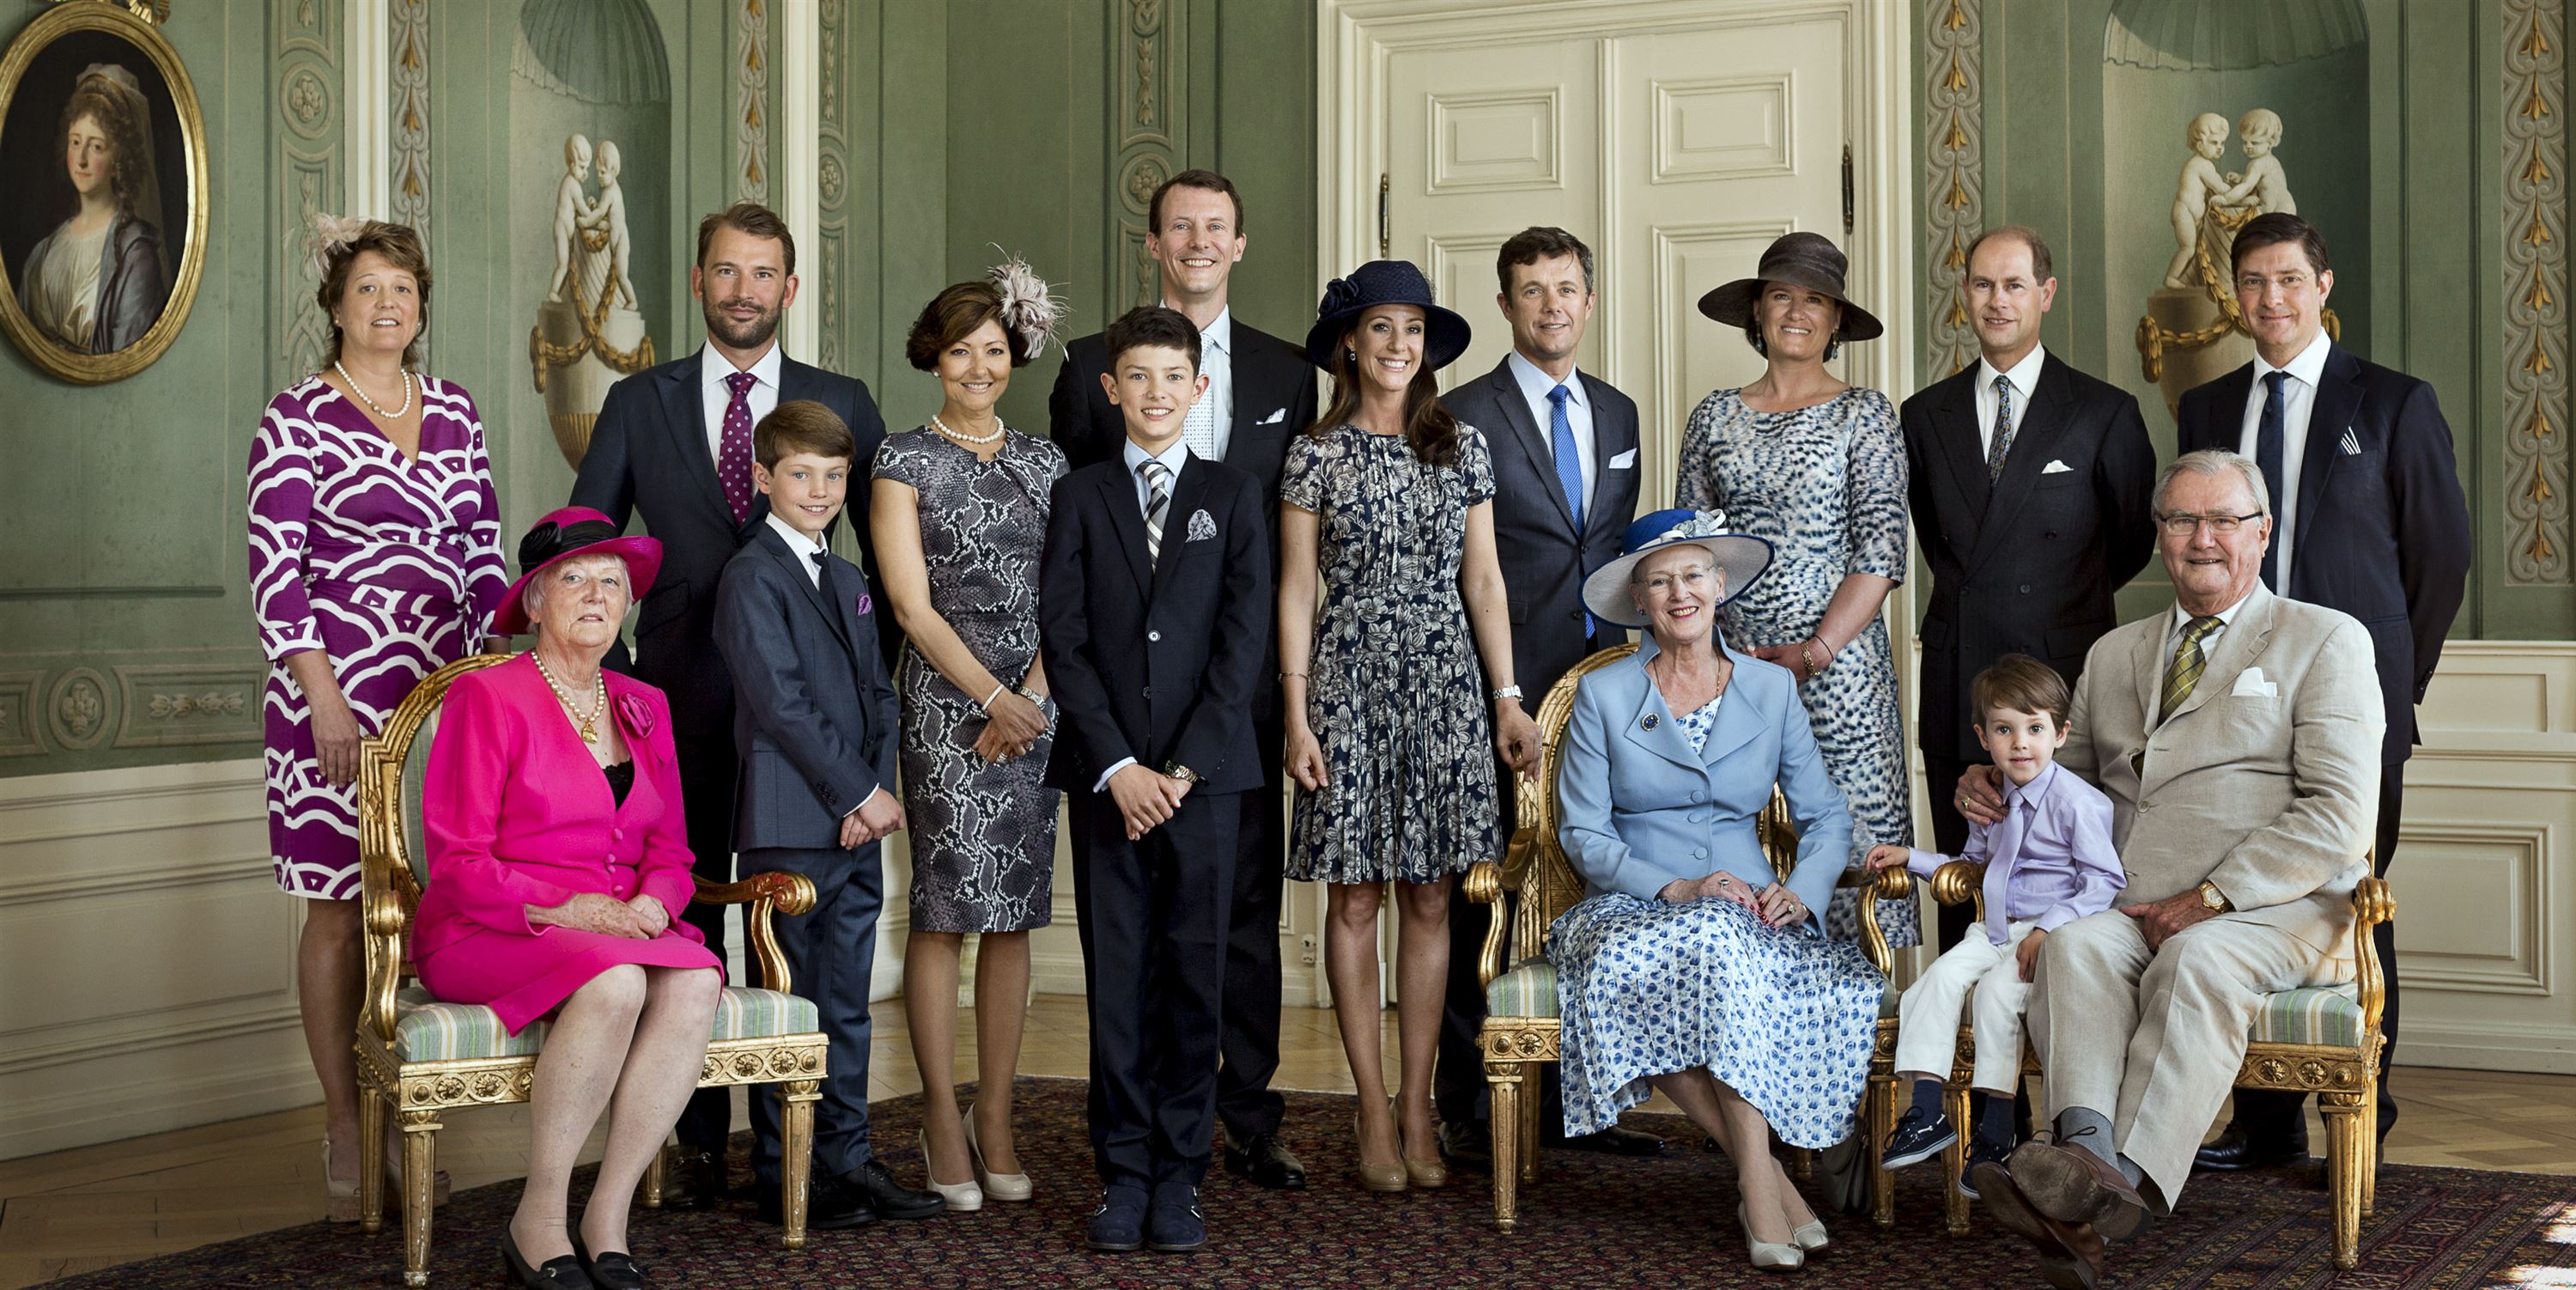 The Royal Family 